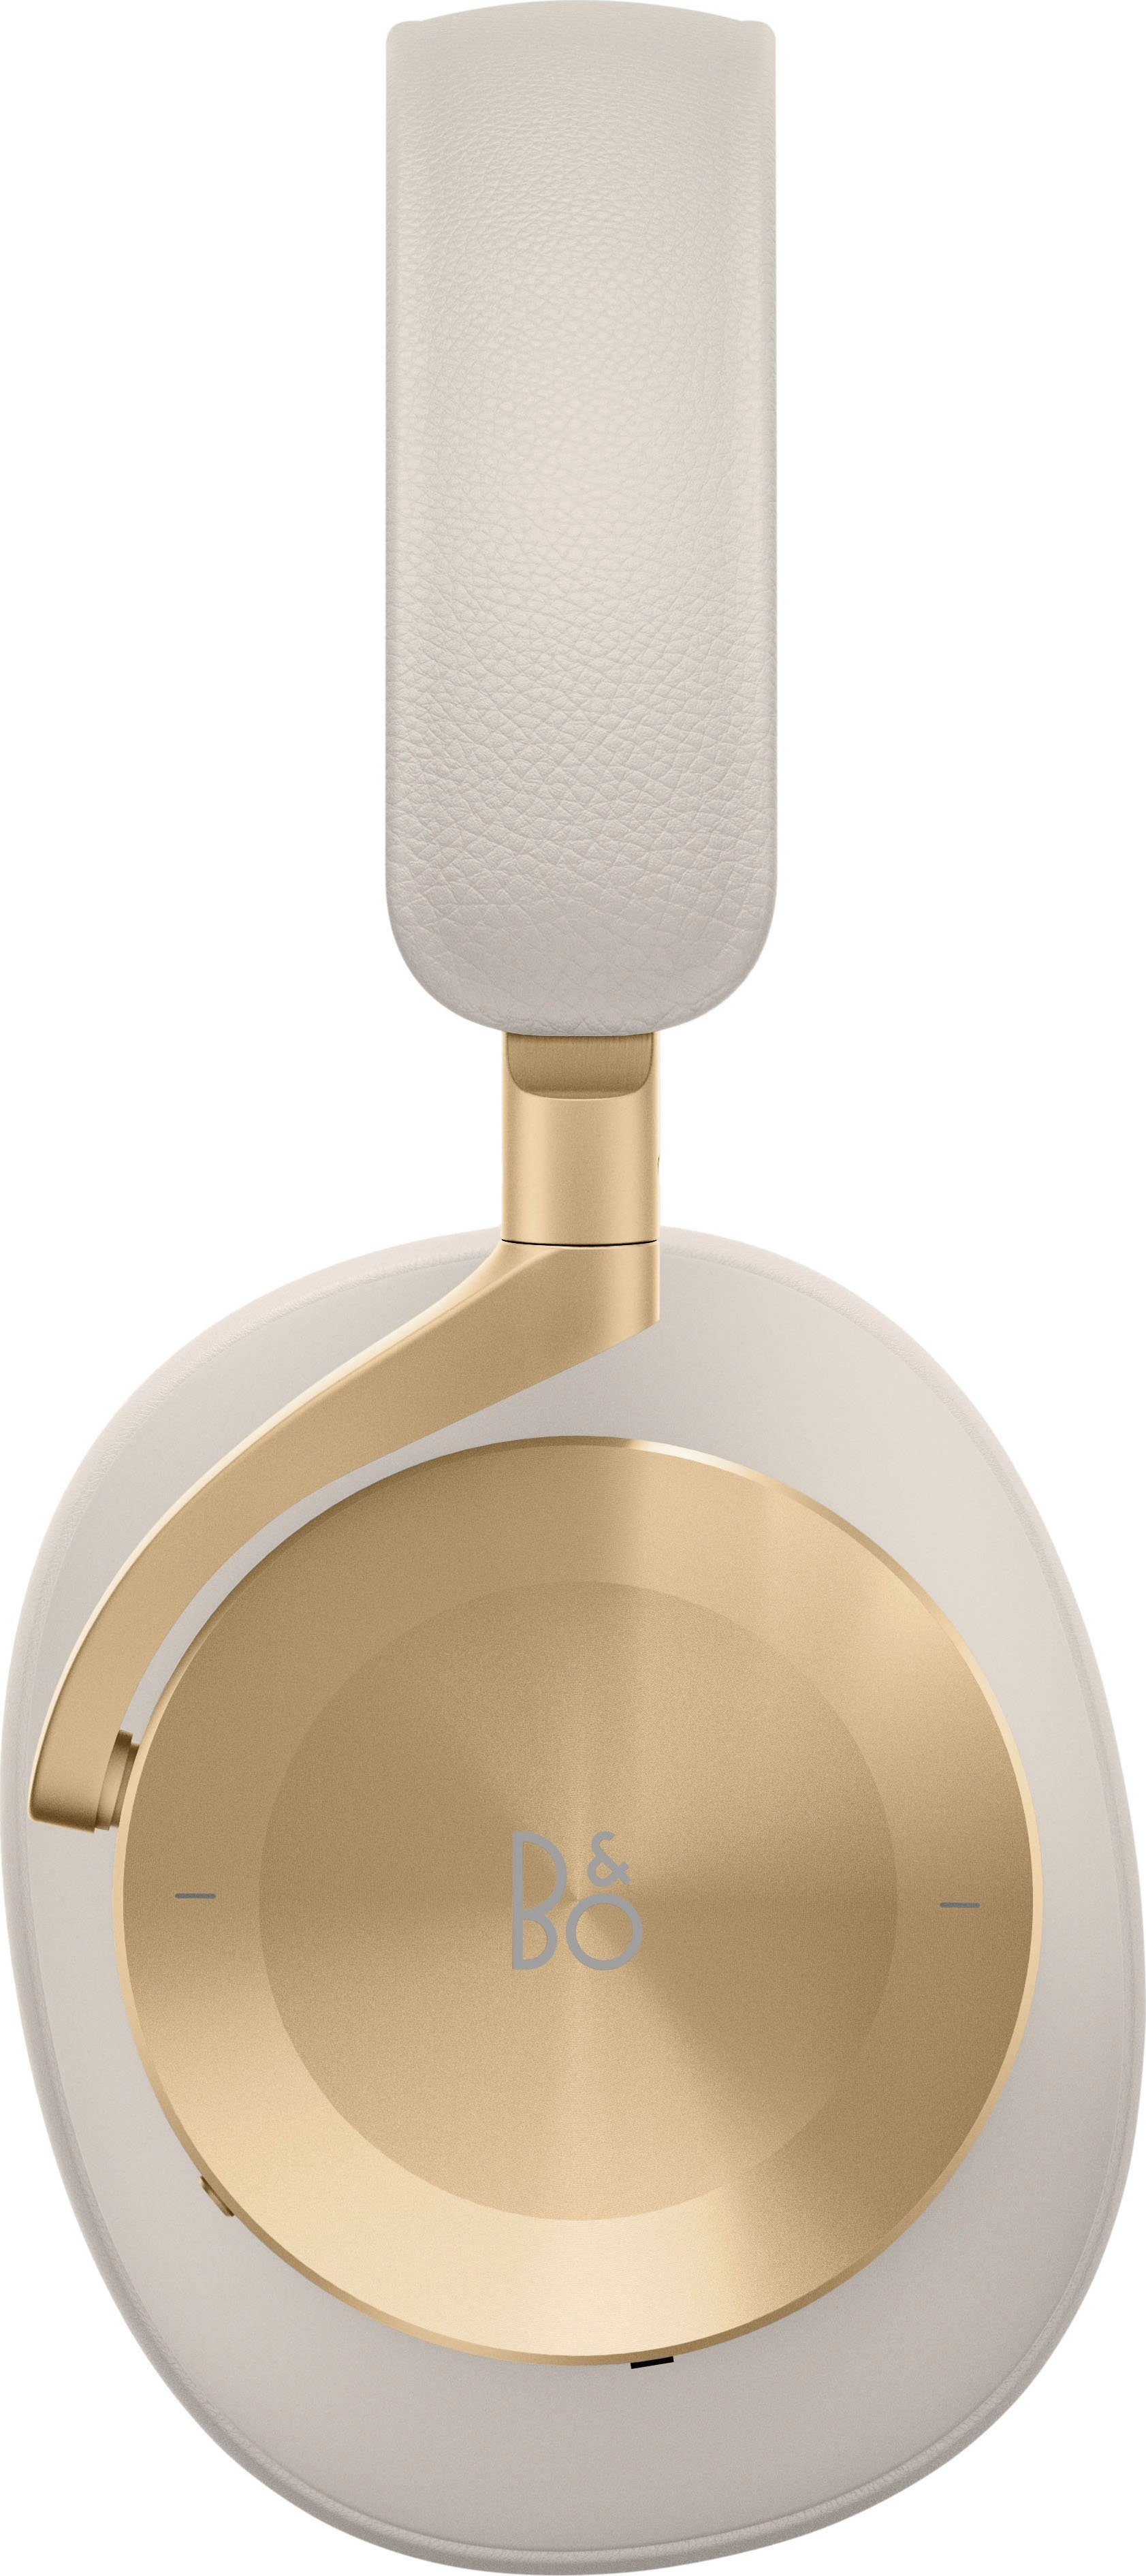 Bang & Olufsen Beoplay H95 (AN-Funktionen, Geräuschisolierung, Ladestandsanzeige, Transparenzmodus, Noise Gold LED Active Freisprechfunktion, Cancelling Tone (ANC), Bluetooth) Over-Ear-Kopfhörer Sprachsteuerung